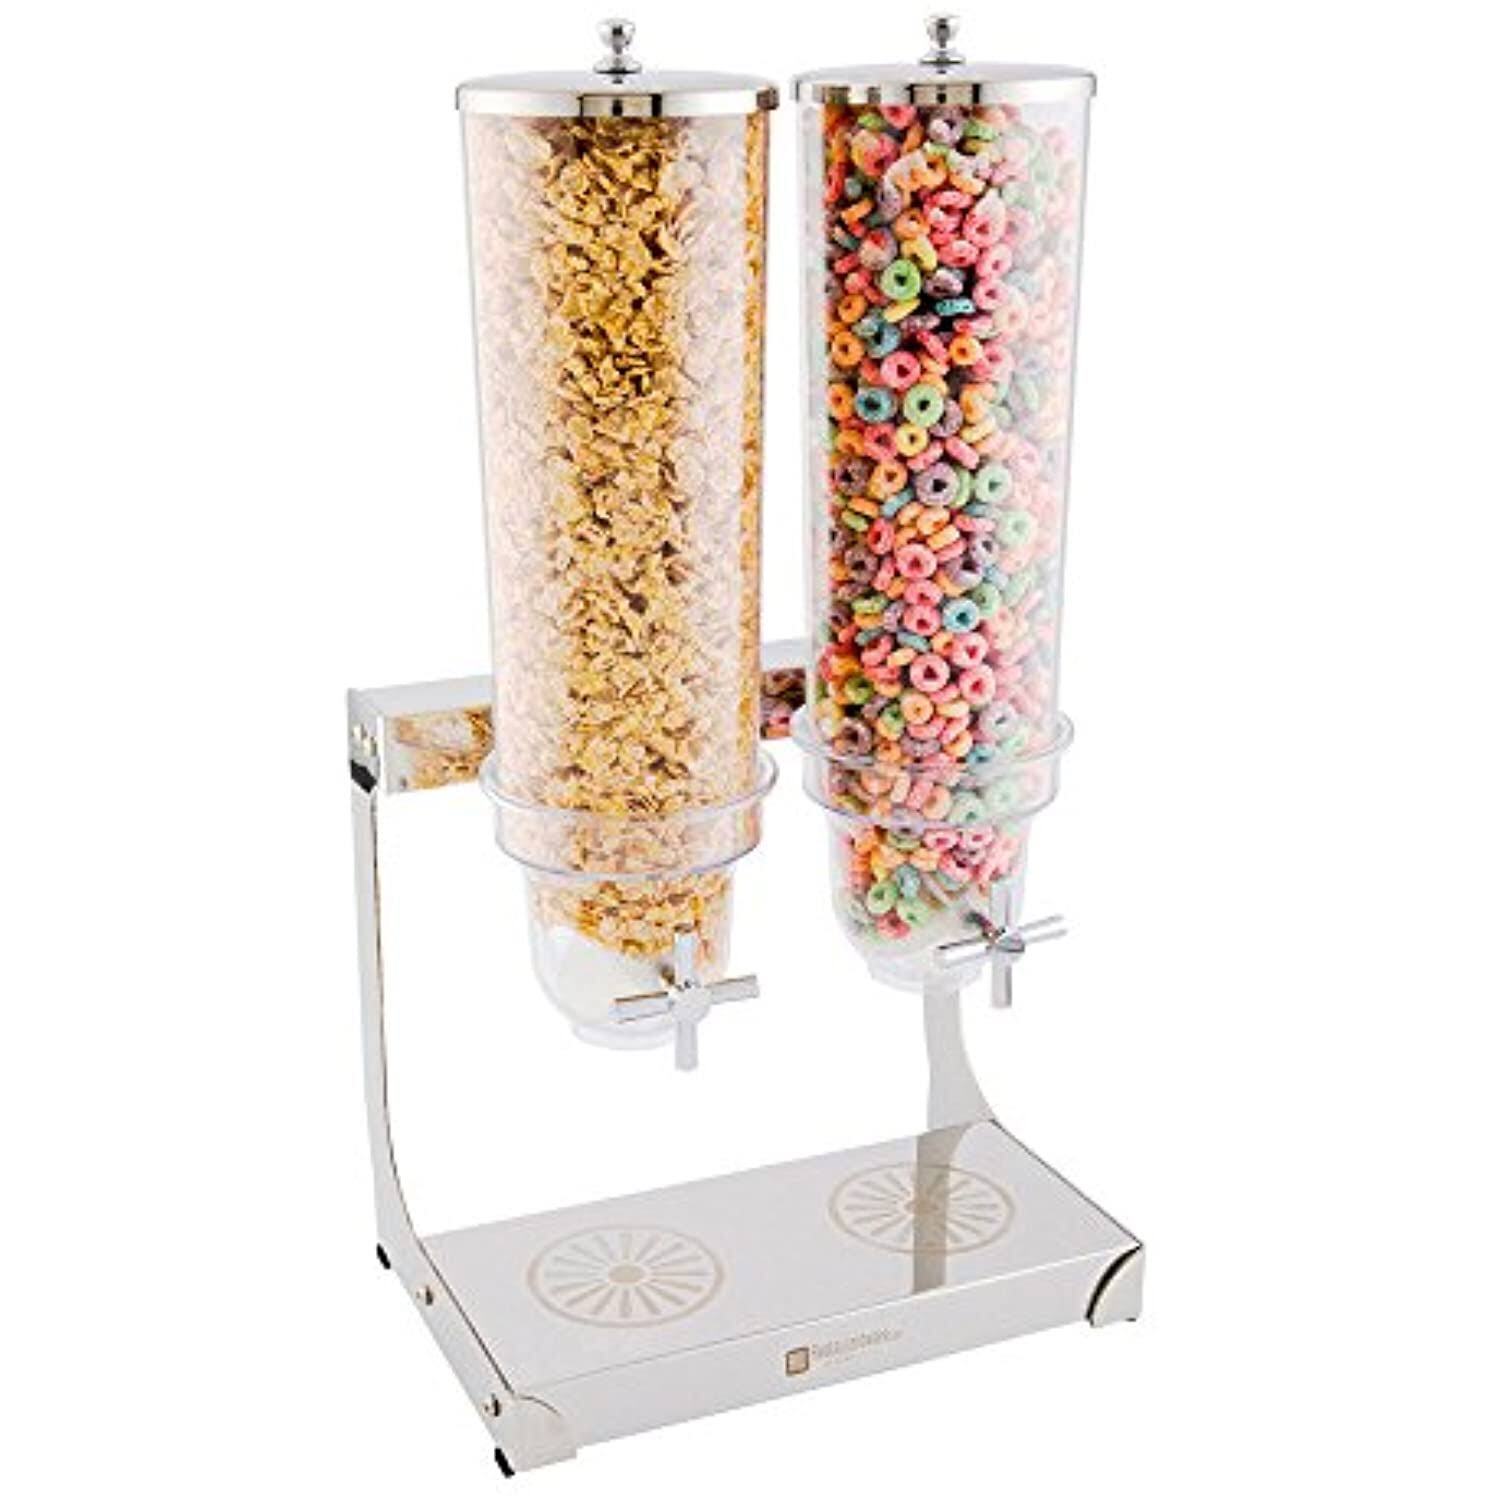 Tall glass cereal dispenser